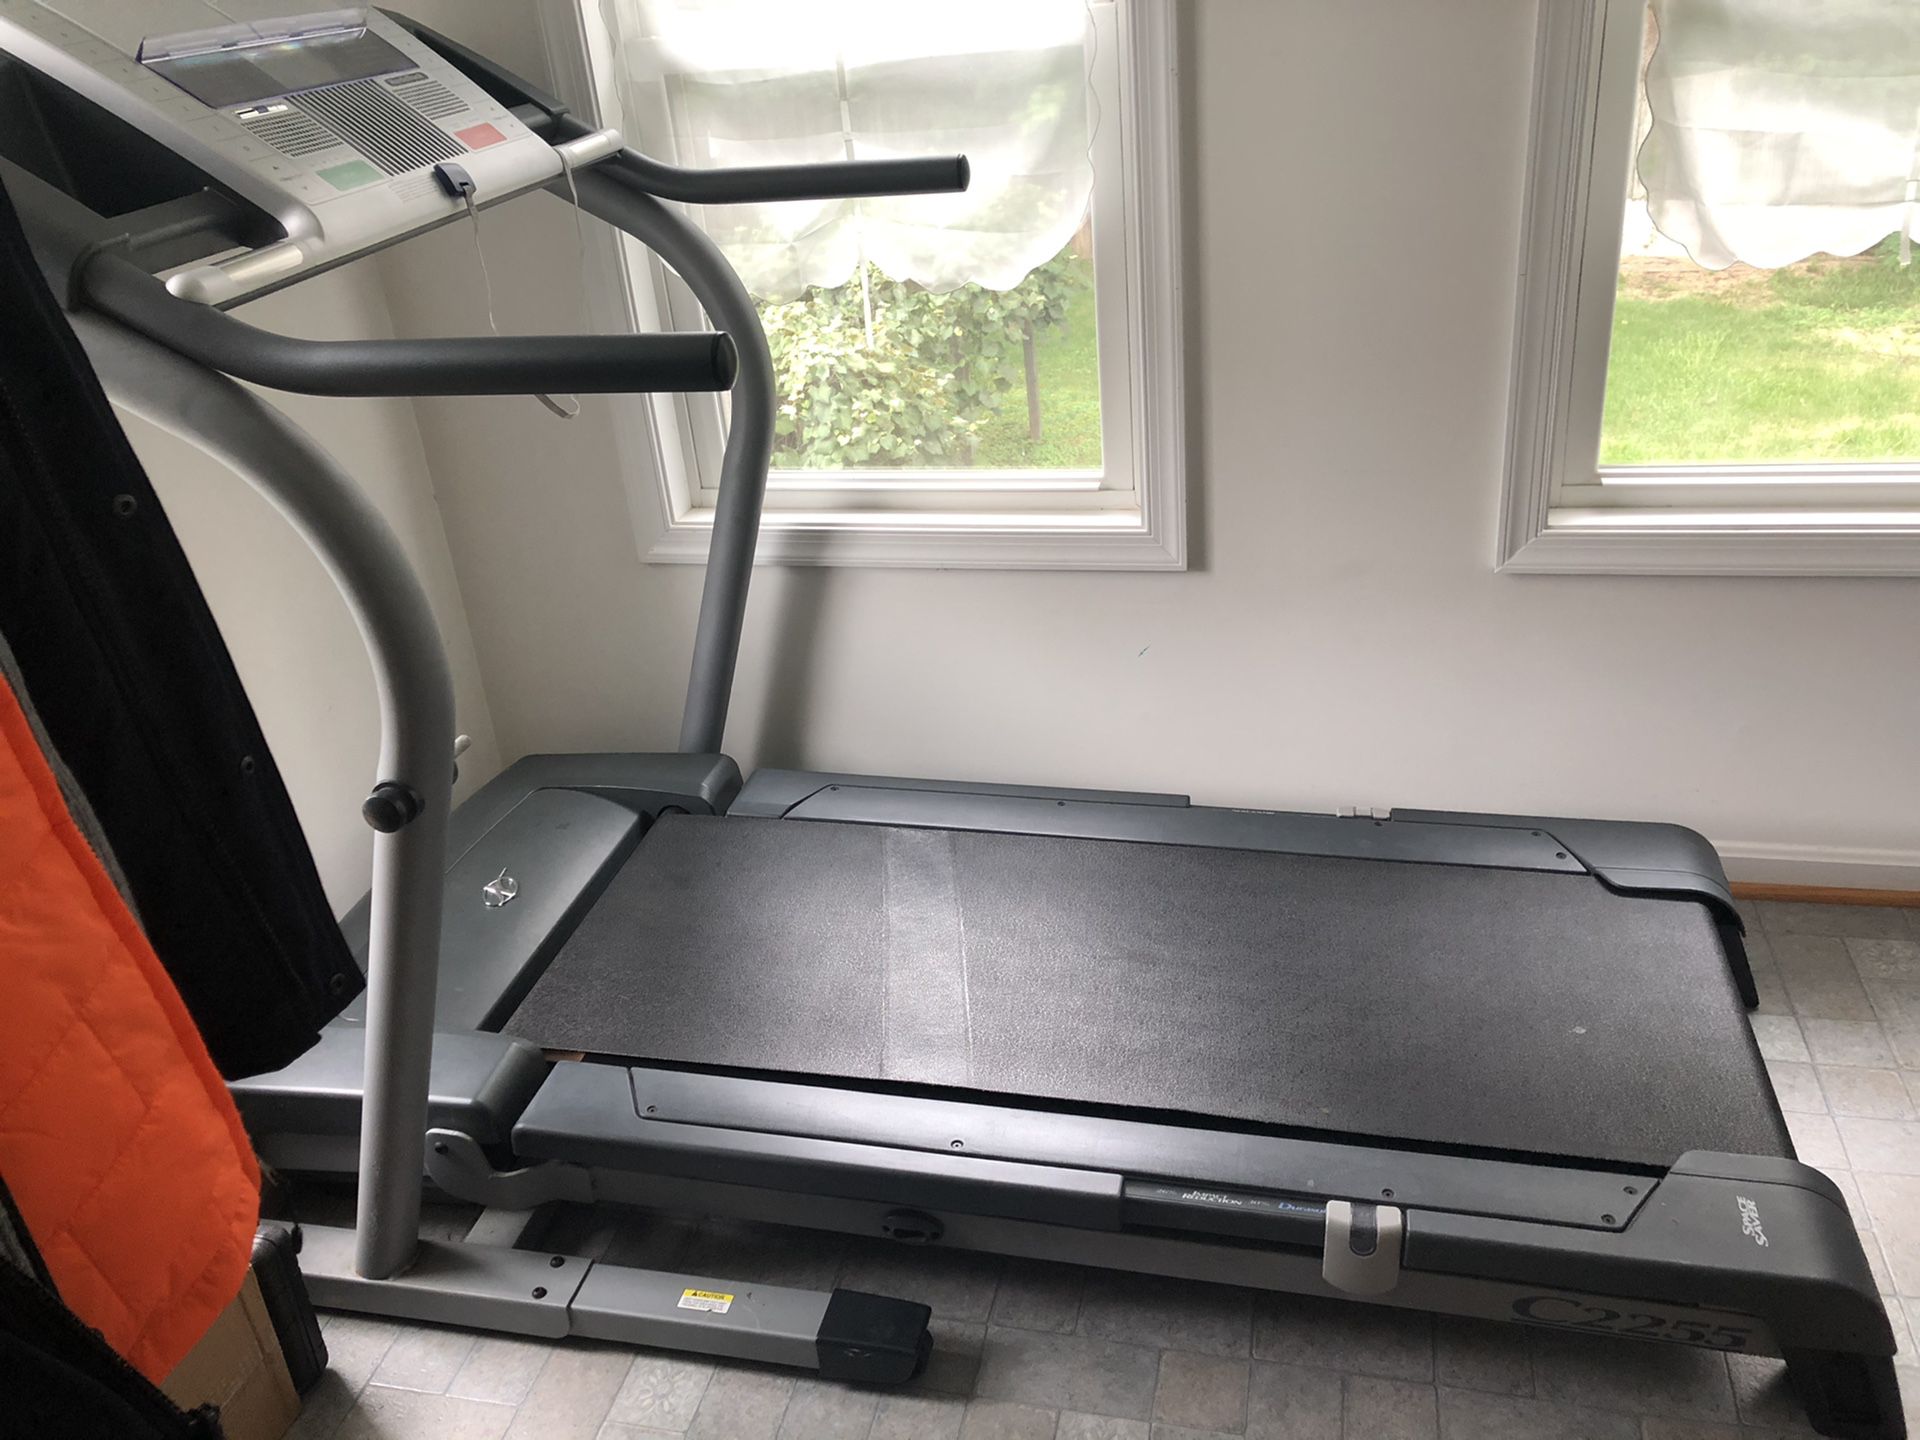 NordicTrack Treadmill C2255